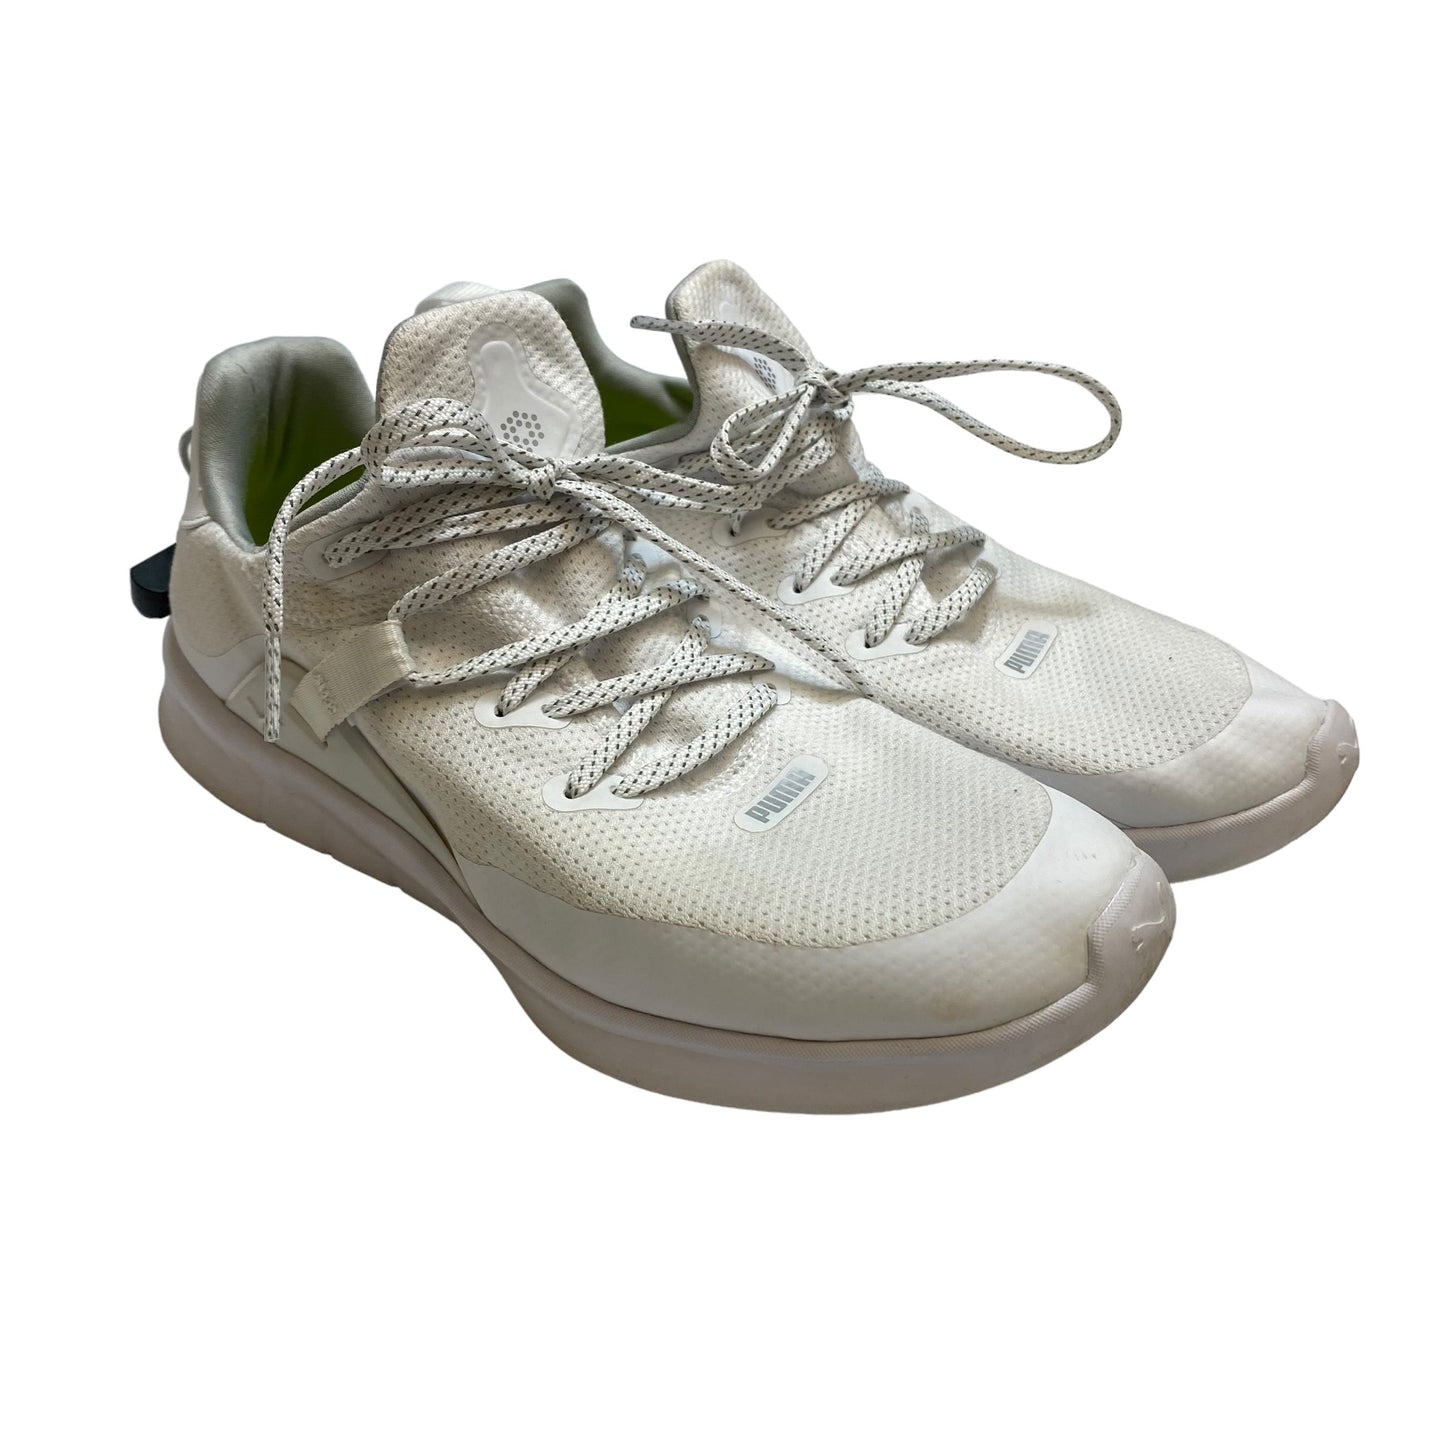 White Shoes Athletic Puma, Size 10